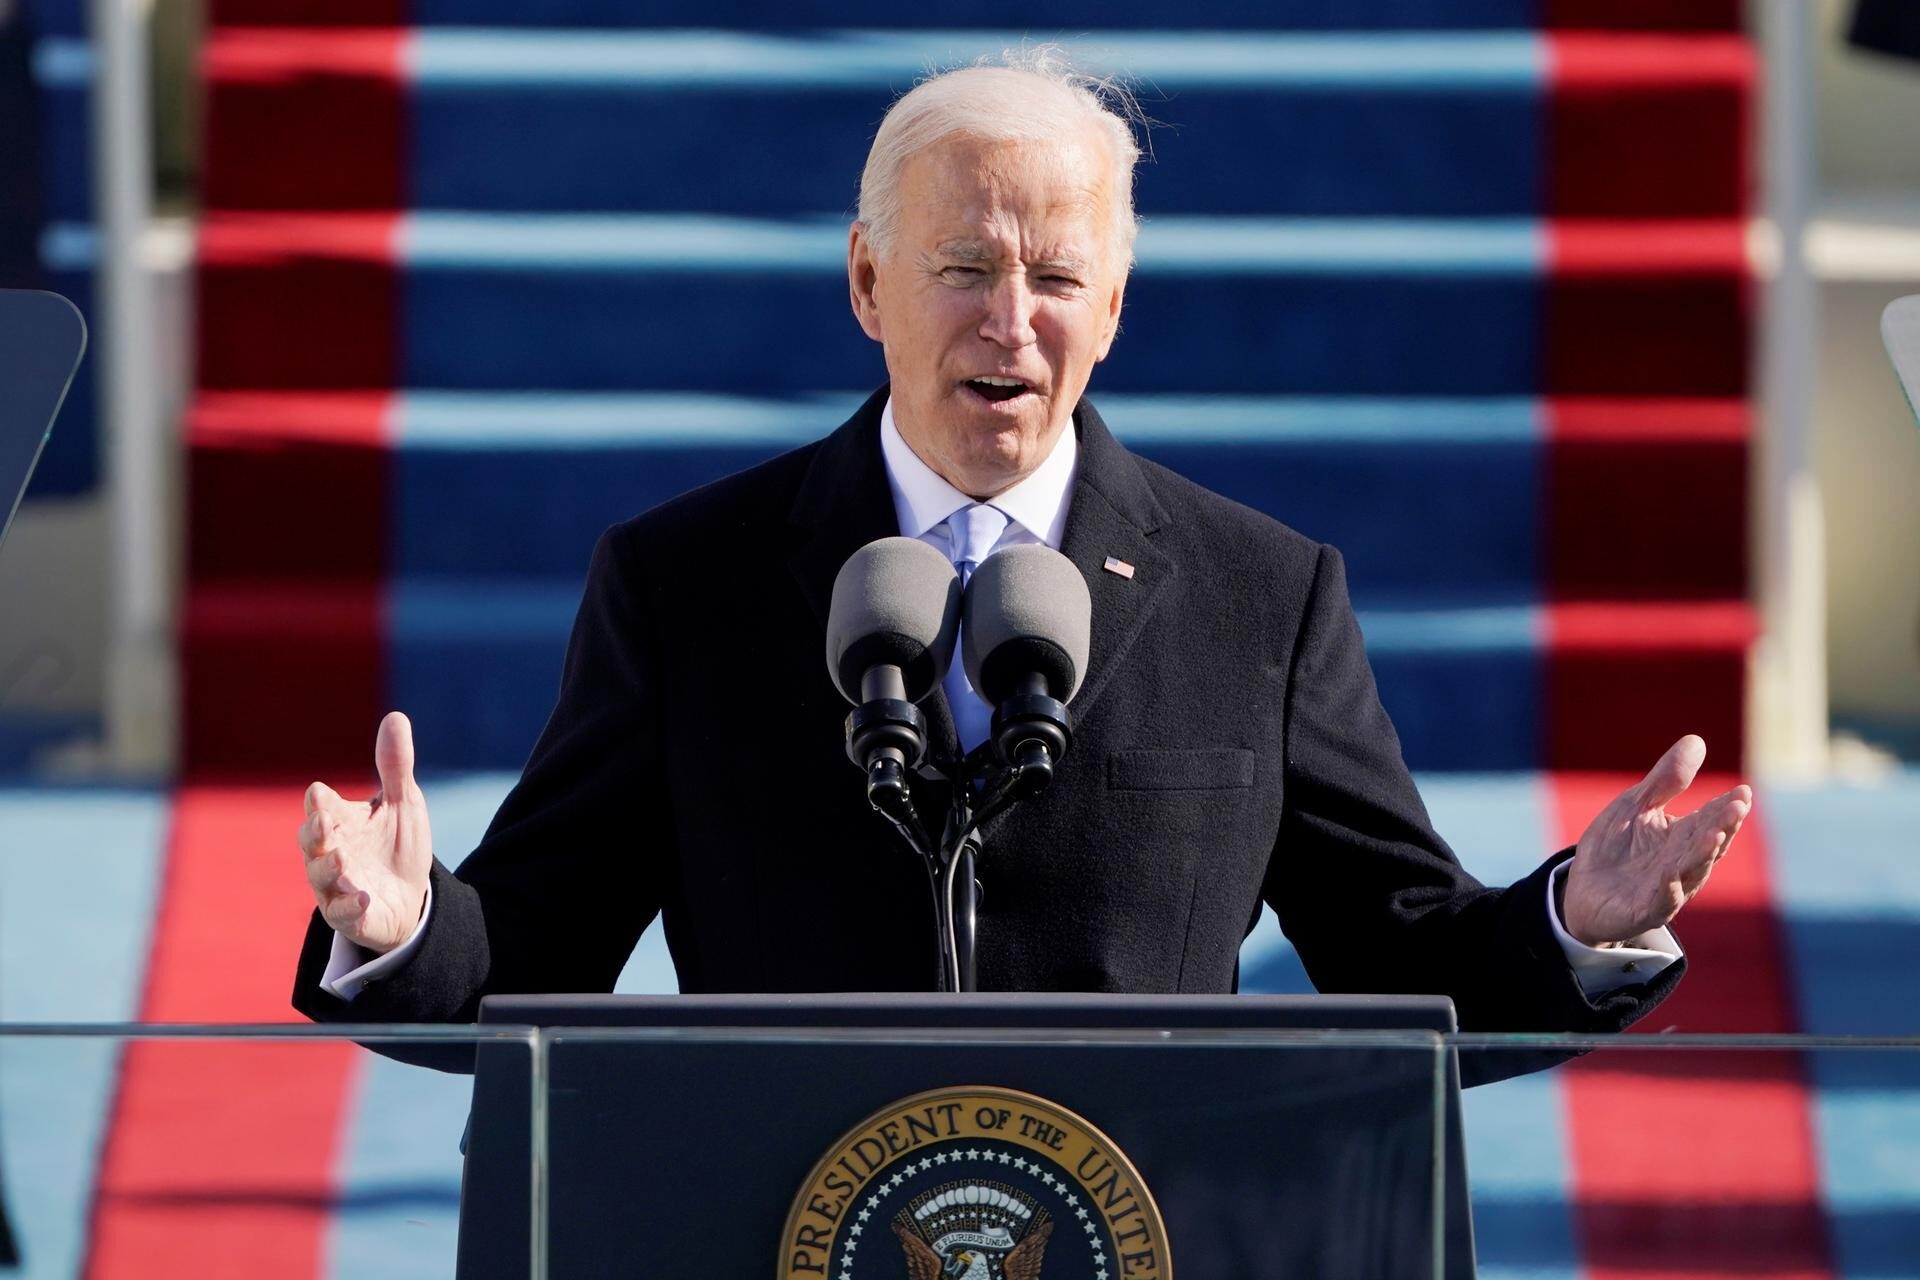 Joe Biden’s inaugural speech